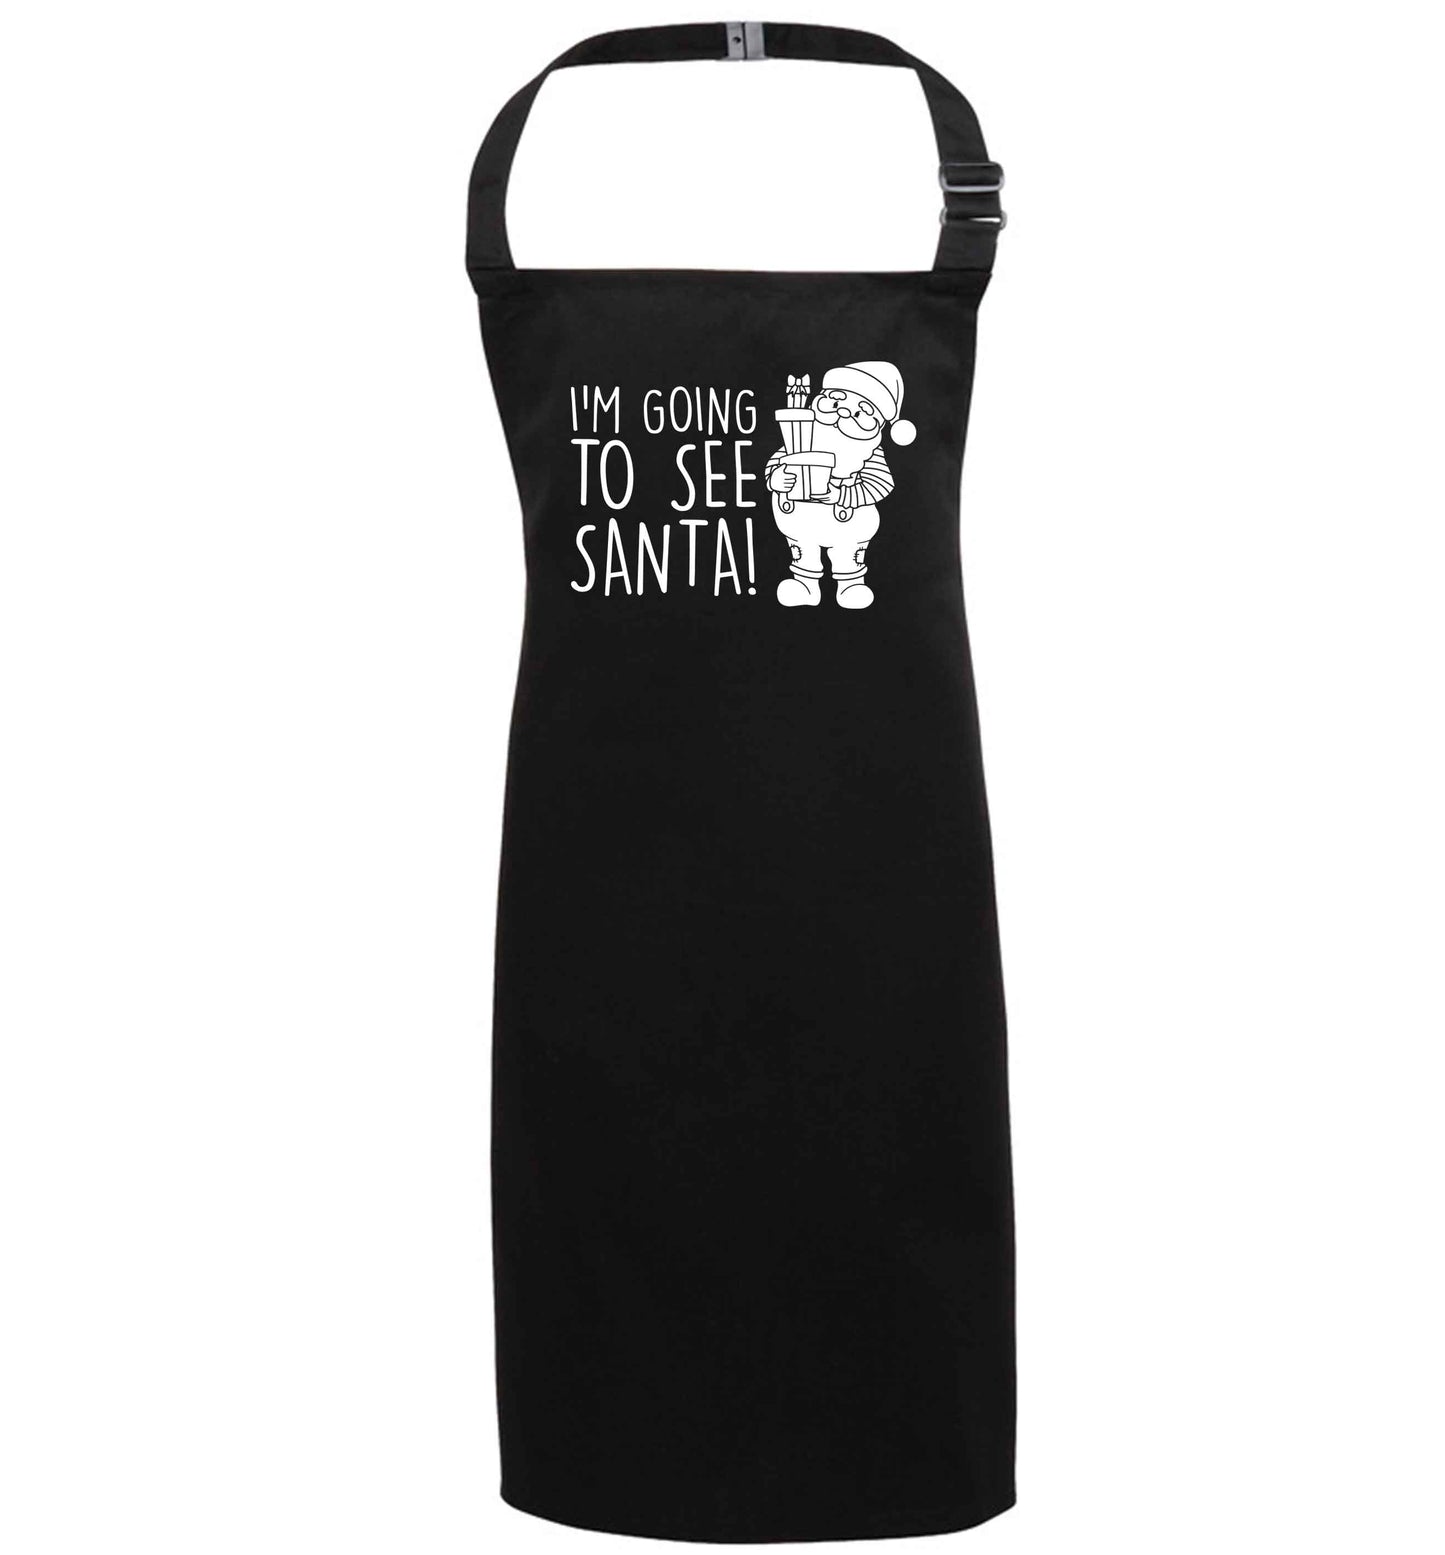 Merry Christmas black apron 7-10 years